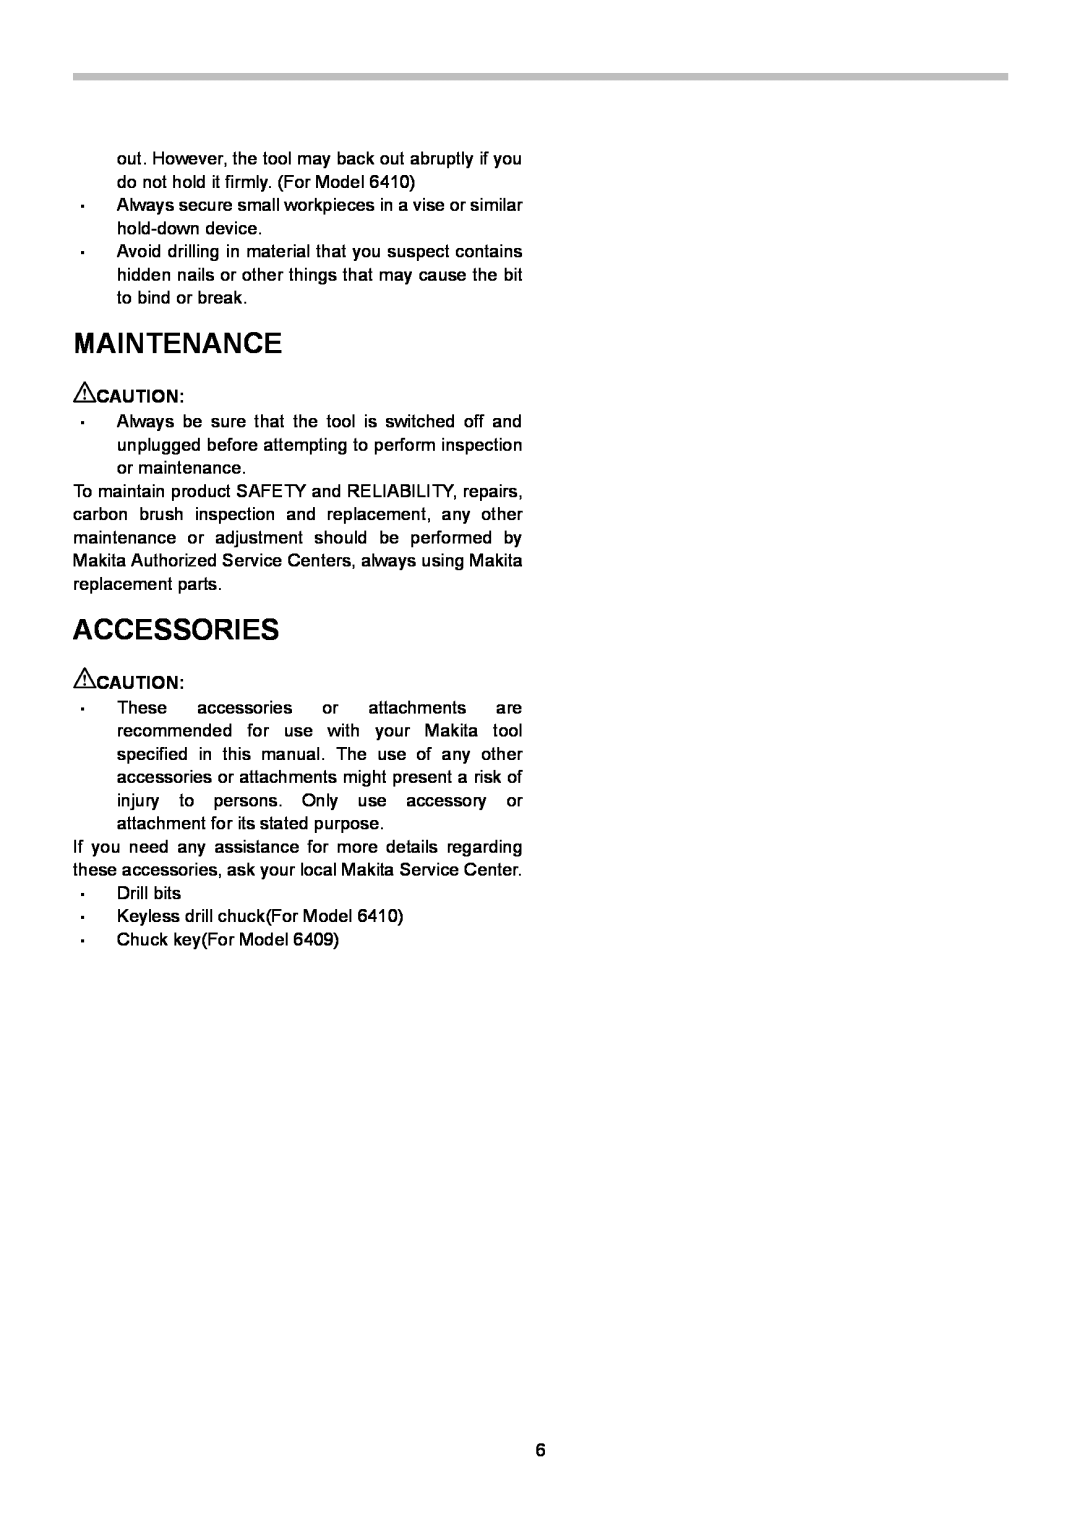 Makita 6410, 6409N instruction manual Maintenance, Accessories 